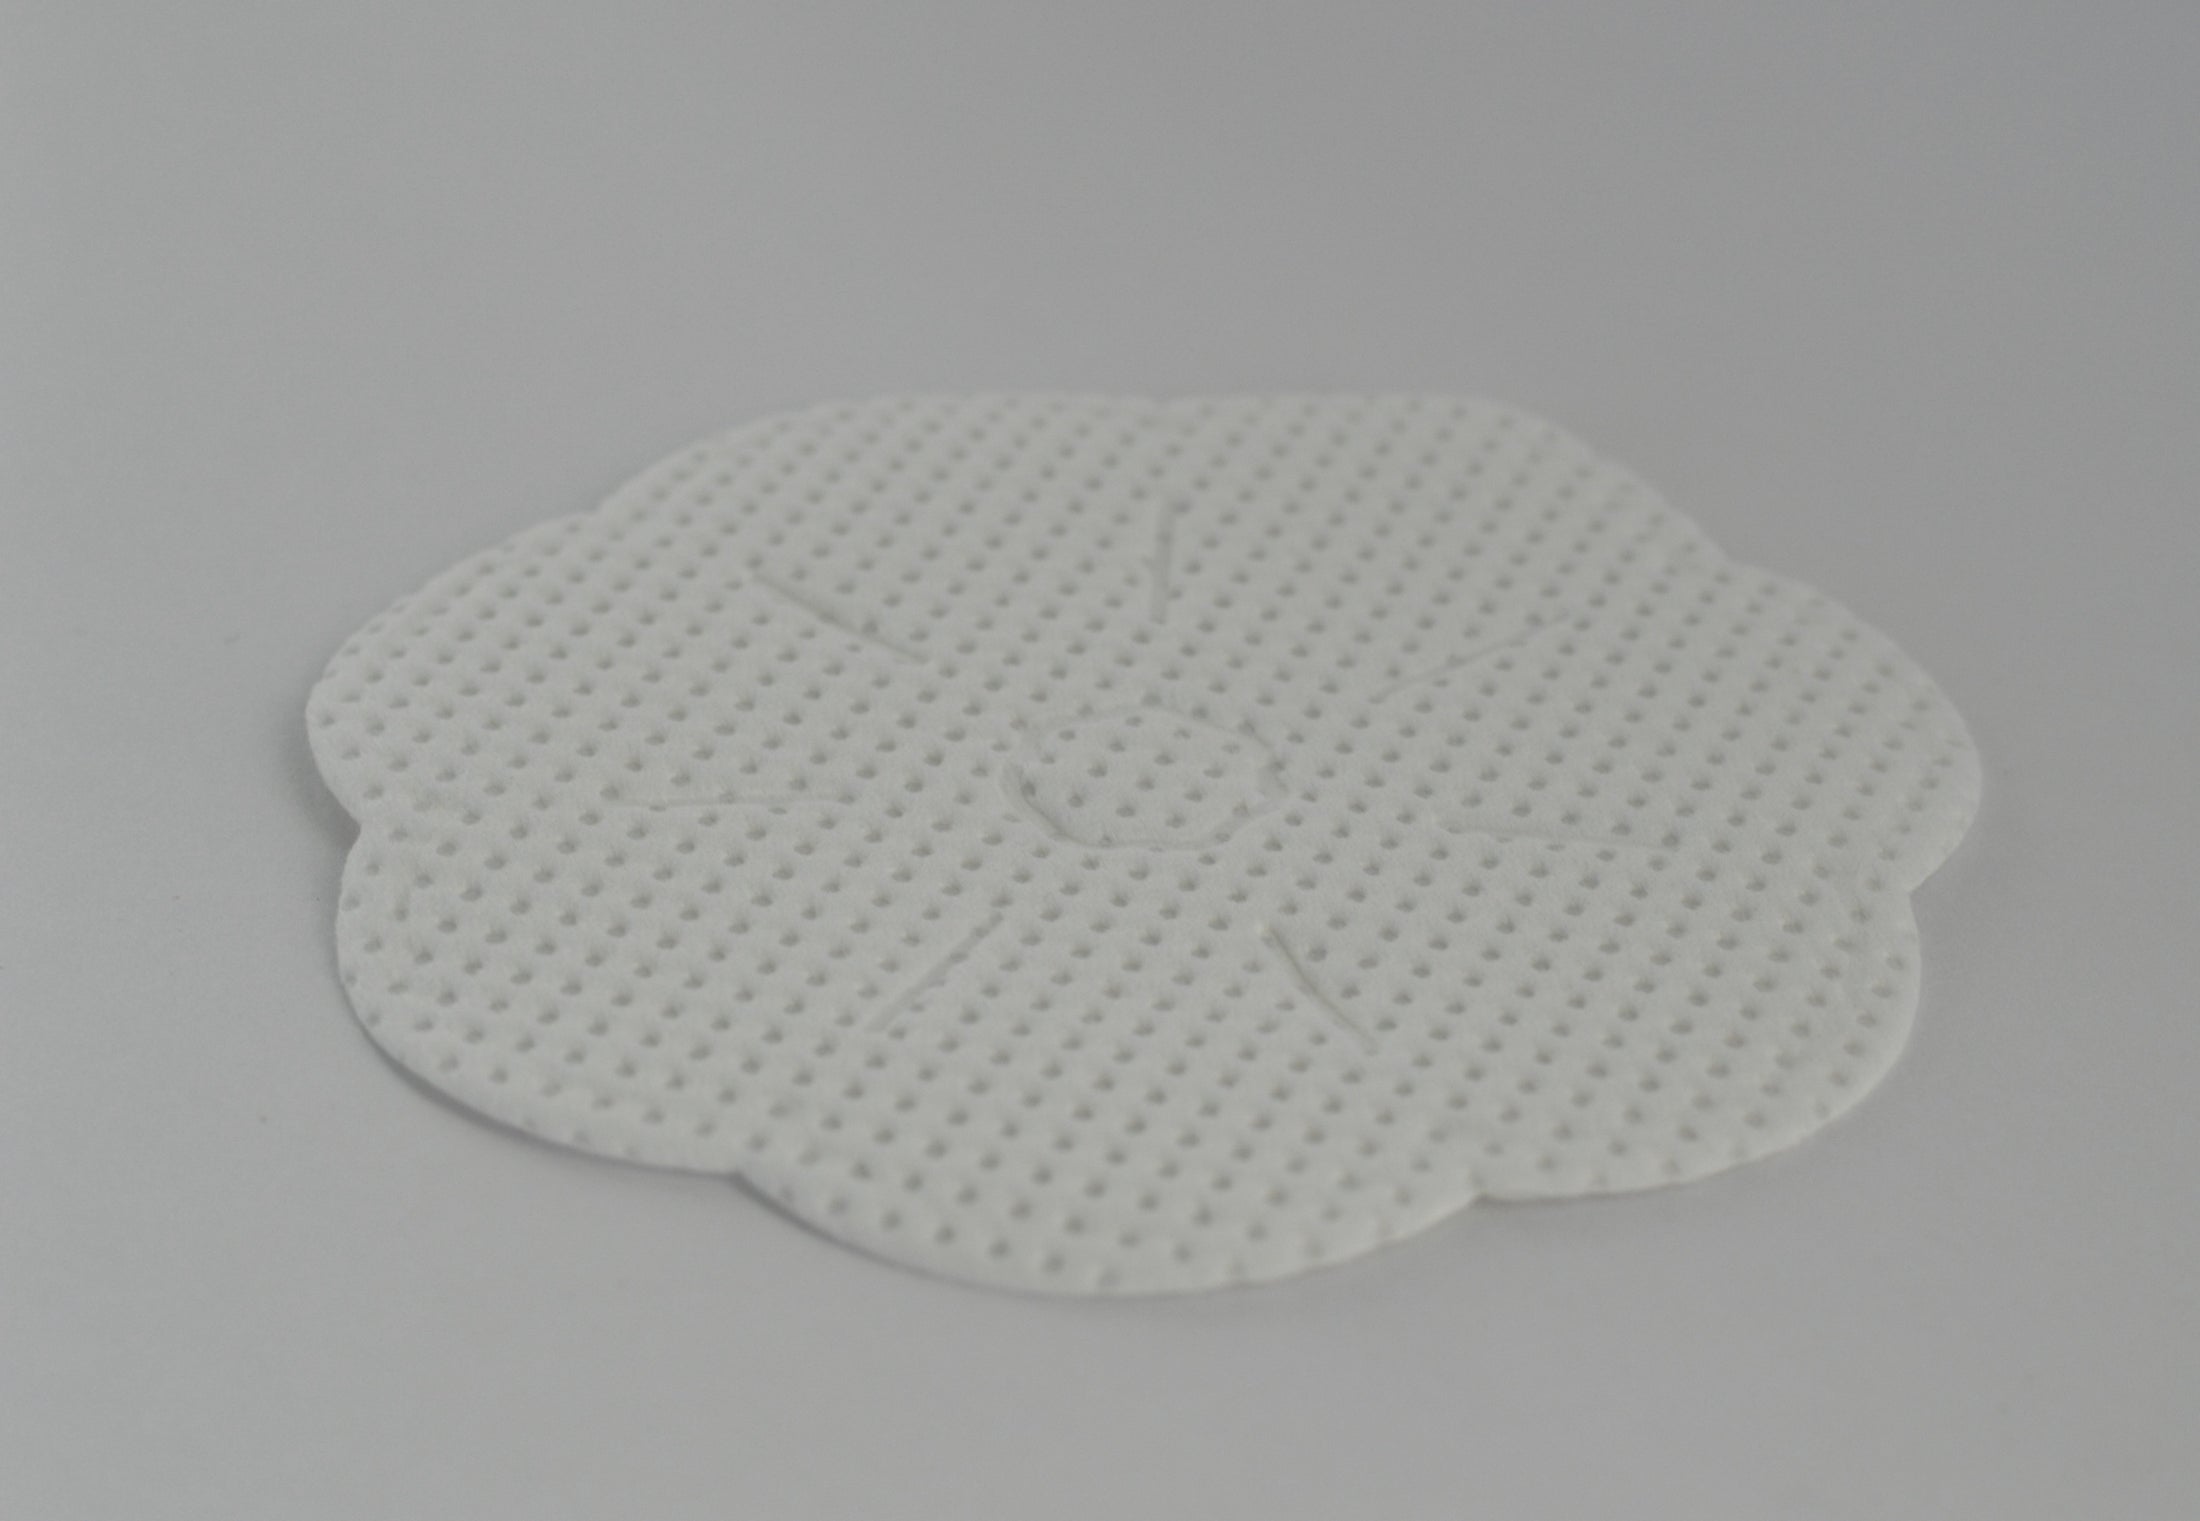 Biodegradable Disposable Nursing Pads